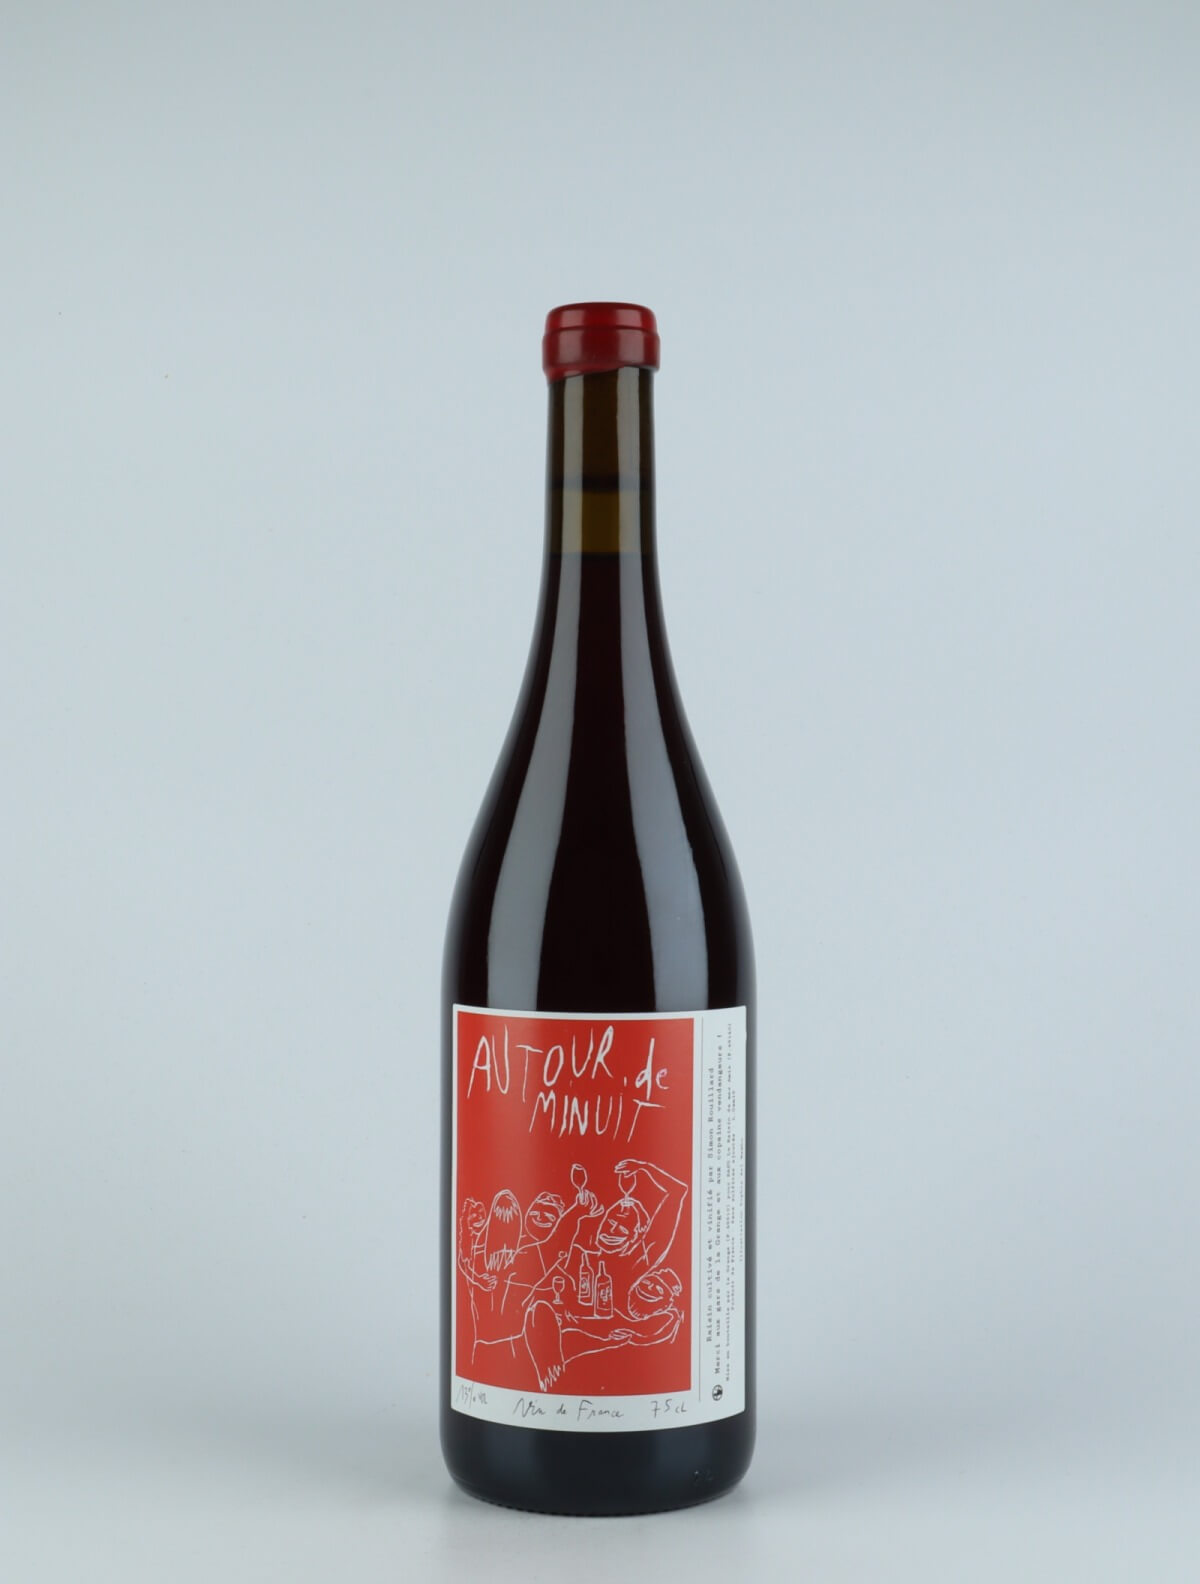 A bottle 2019 Autour de Minuit Red wine from Simon Rouillard, Loire in France